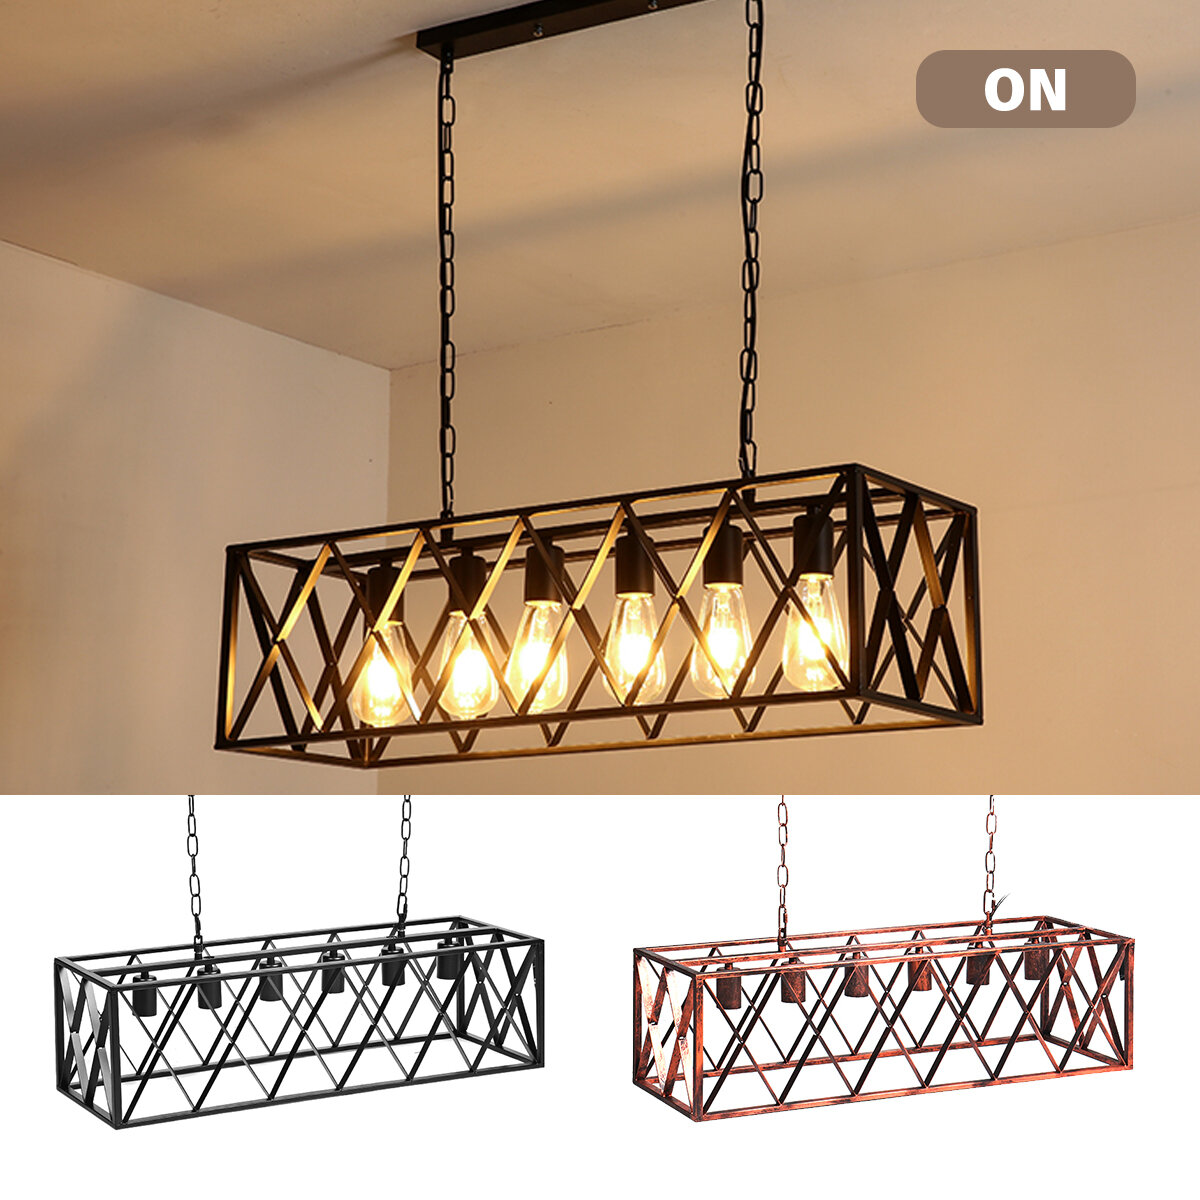 Image of 85-265V E27 Industrial Kitchen Pendant 4/6-Light Chandelier Ceiling Lamp Fixture Decor Without Bulb